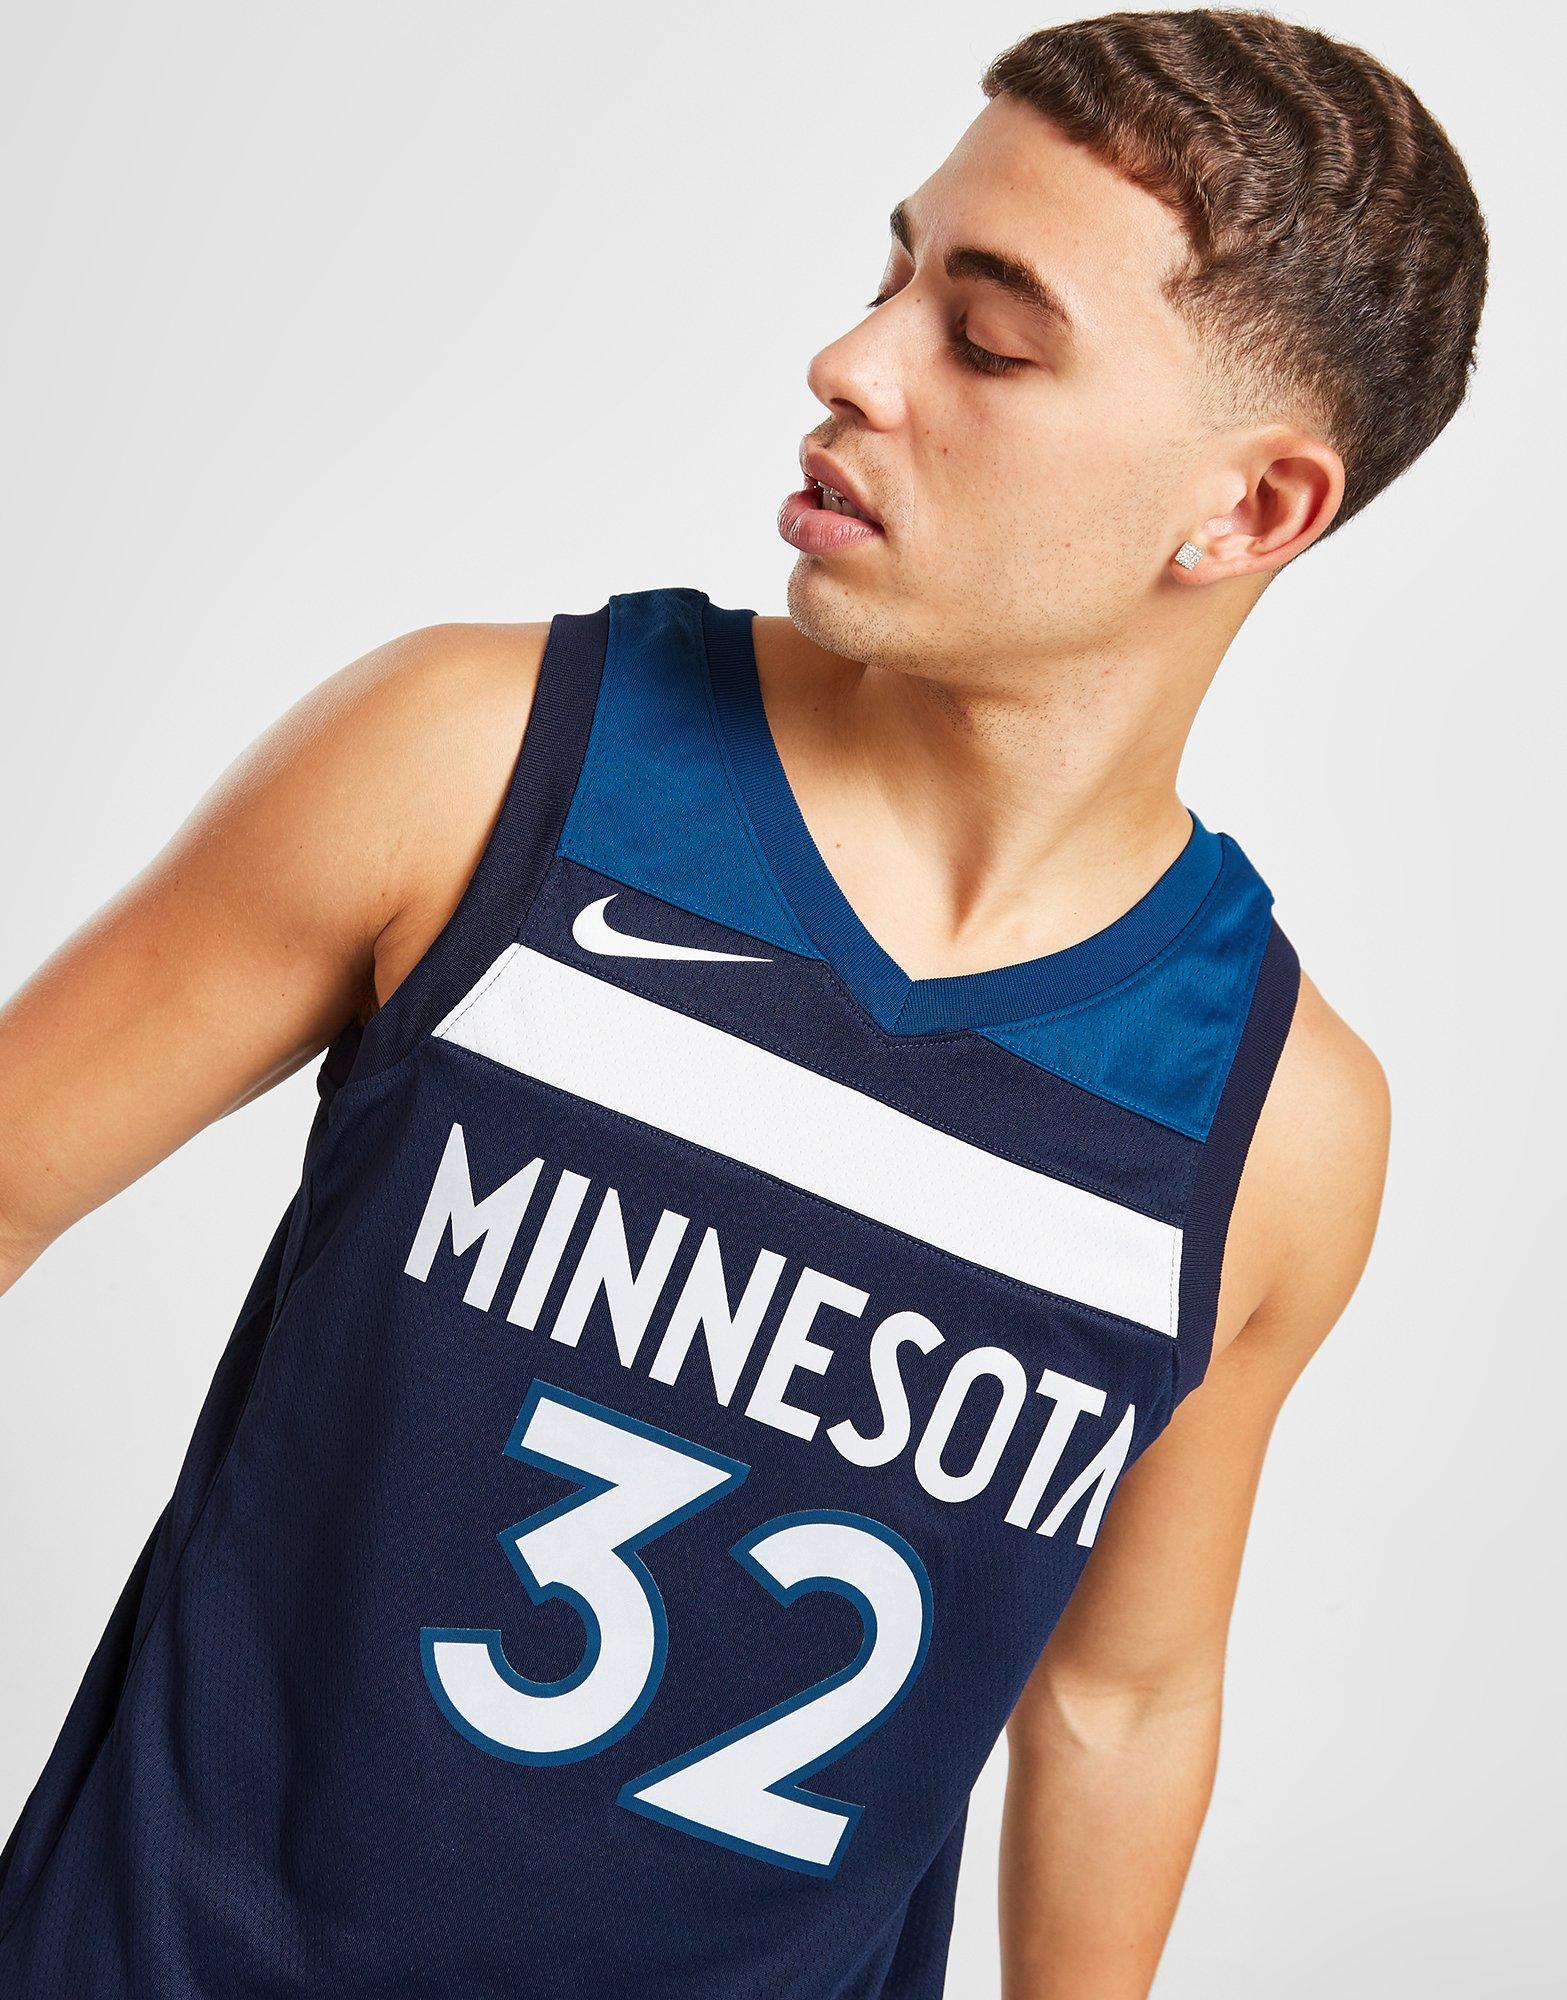  Karl Anthony Towns Minnesota Timberwolves Blue #32